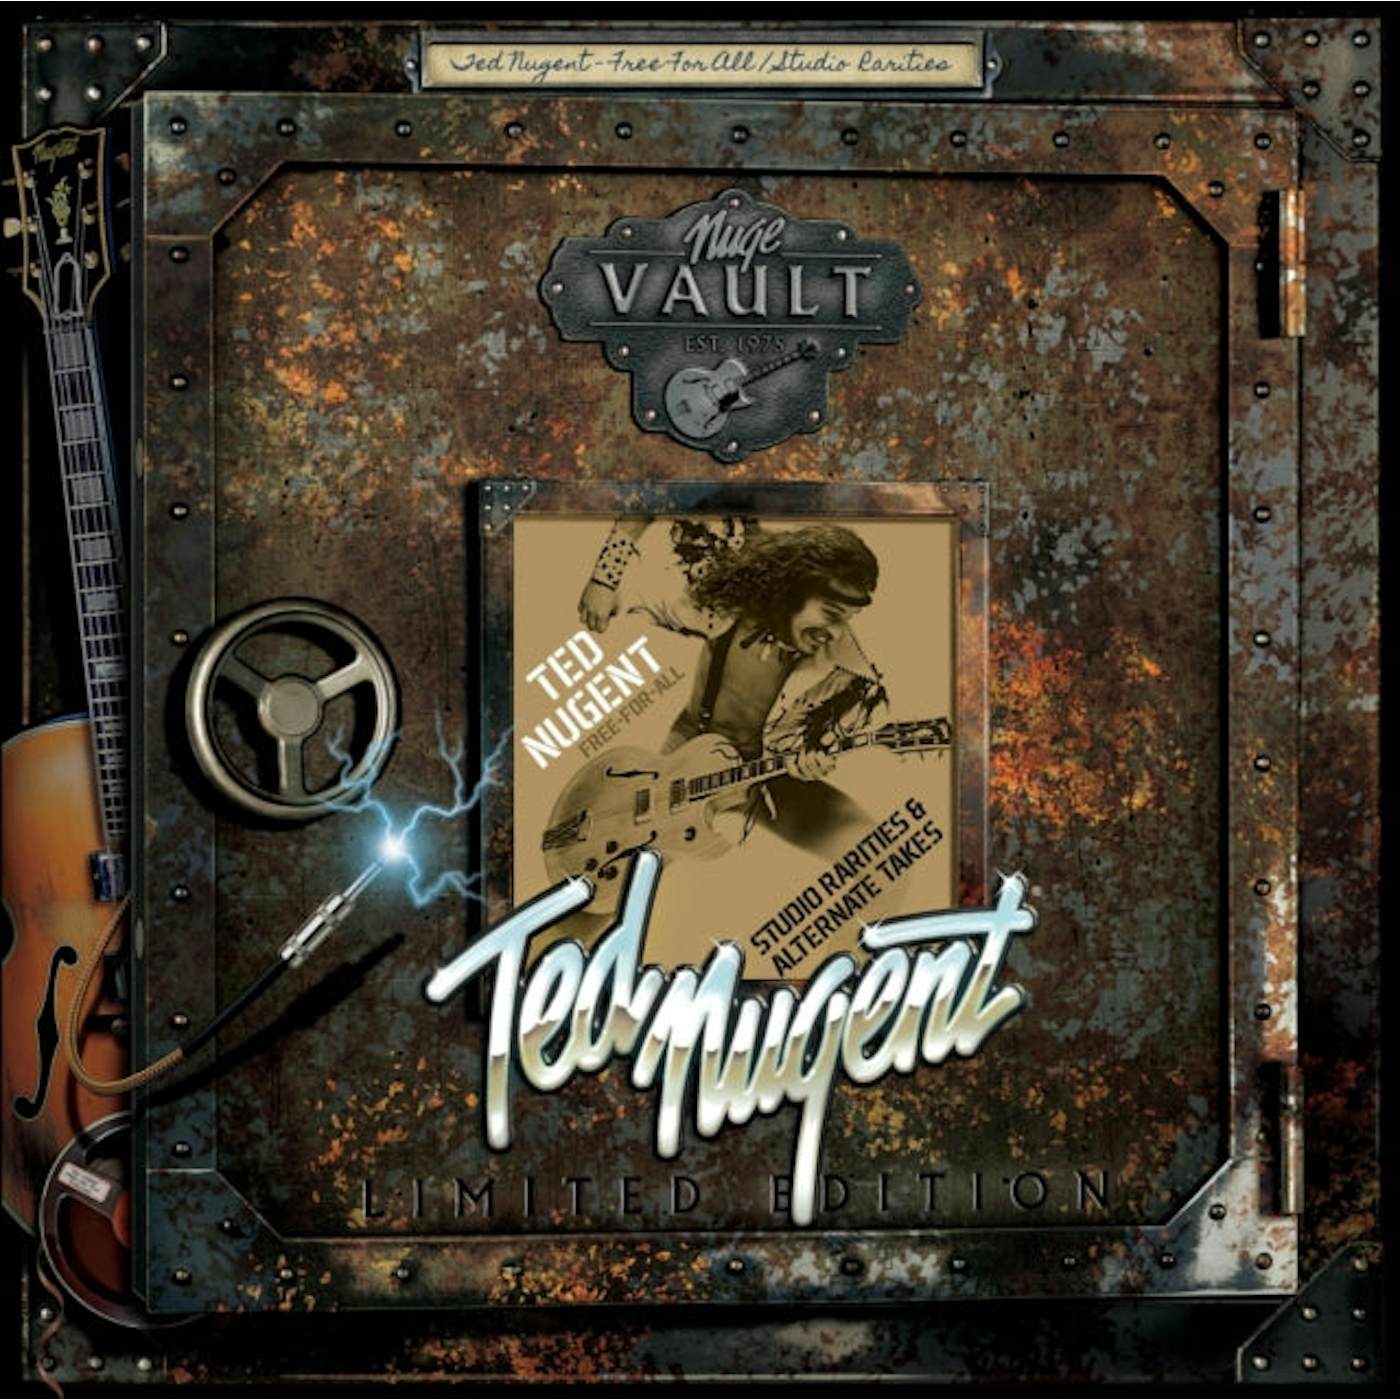 Ted Nugent LP - Nuge Vault  Vol. 1 Free-For-A (Vinyl)